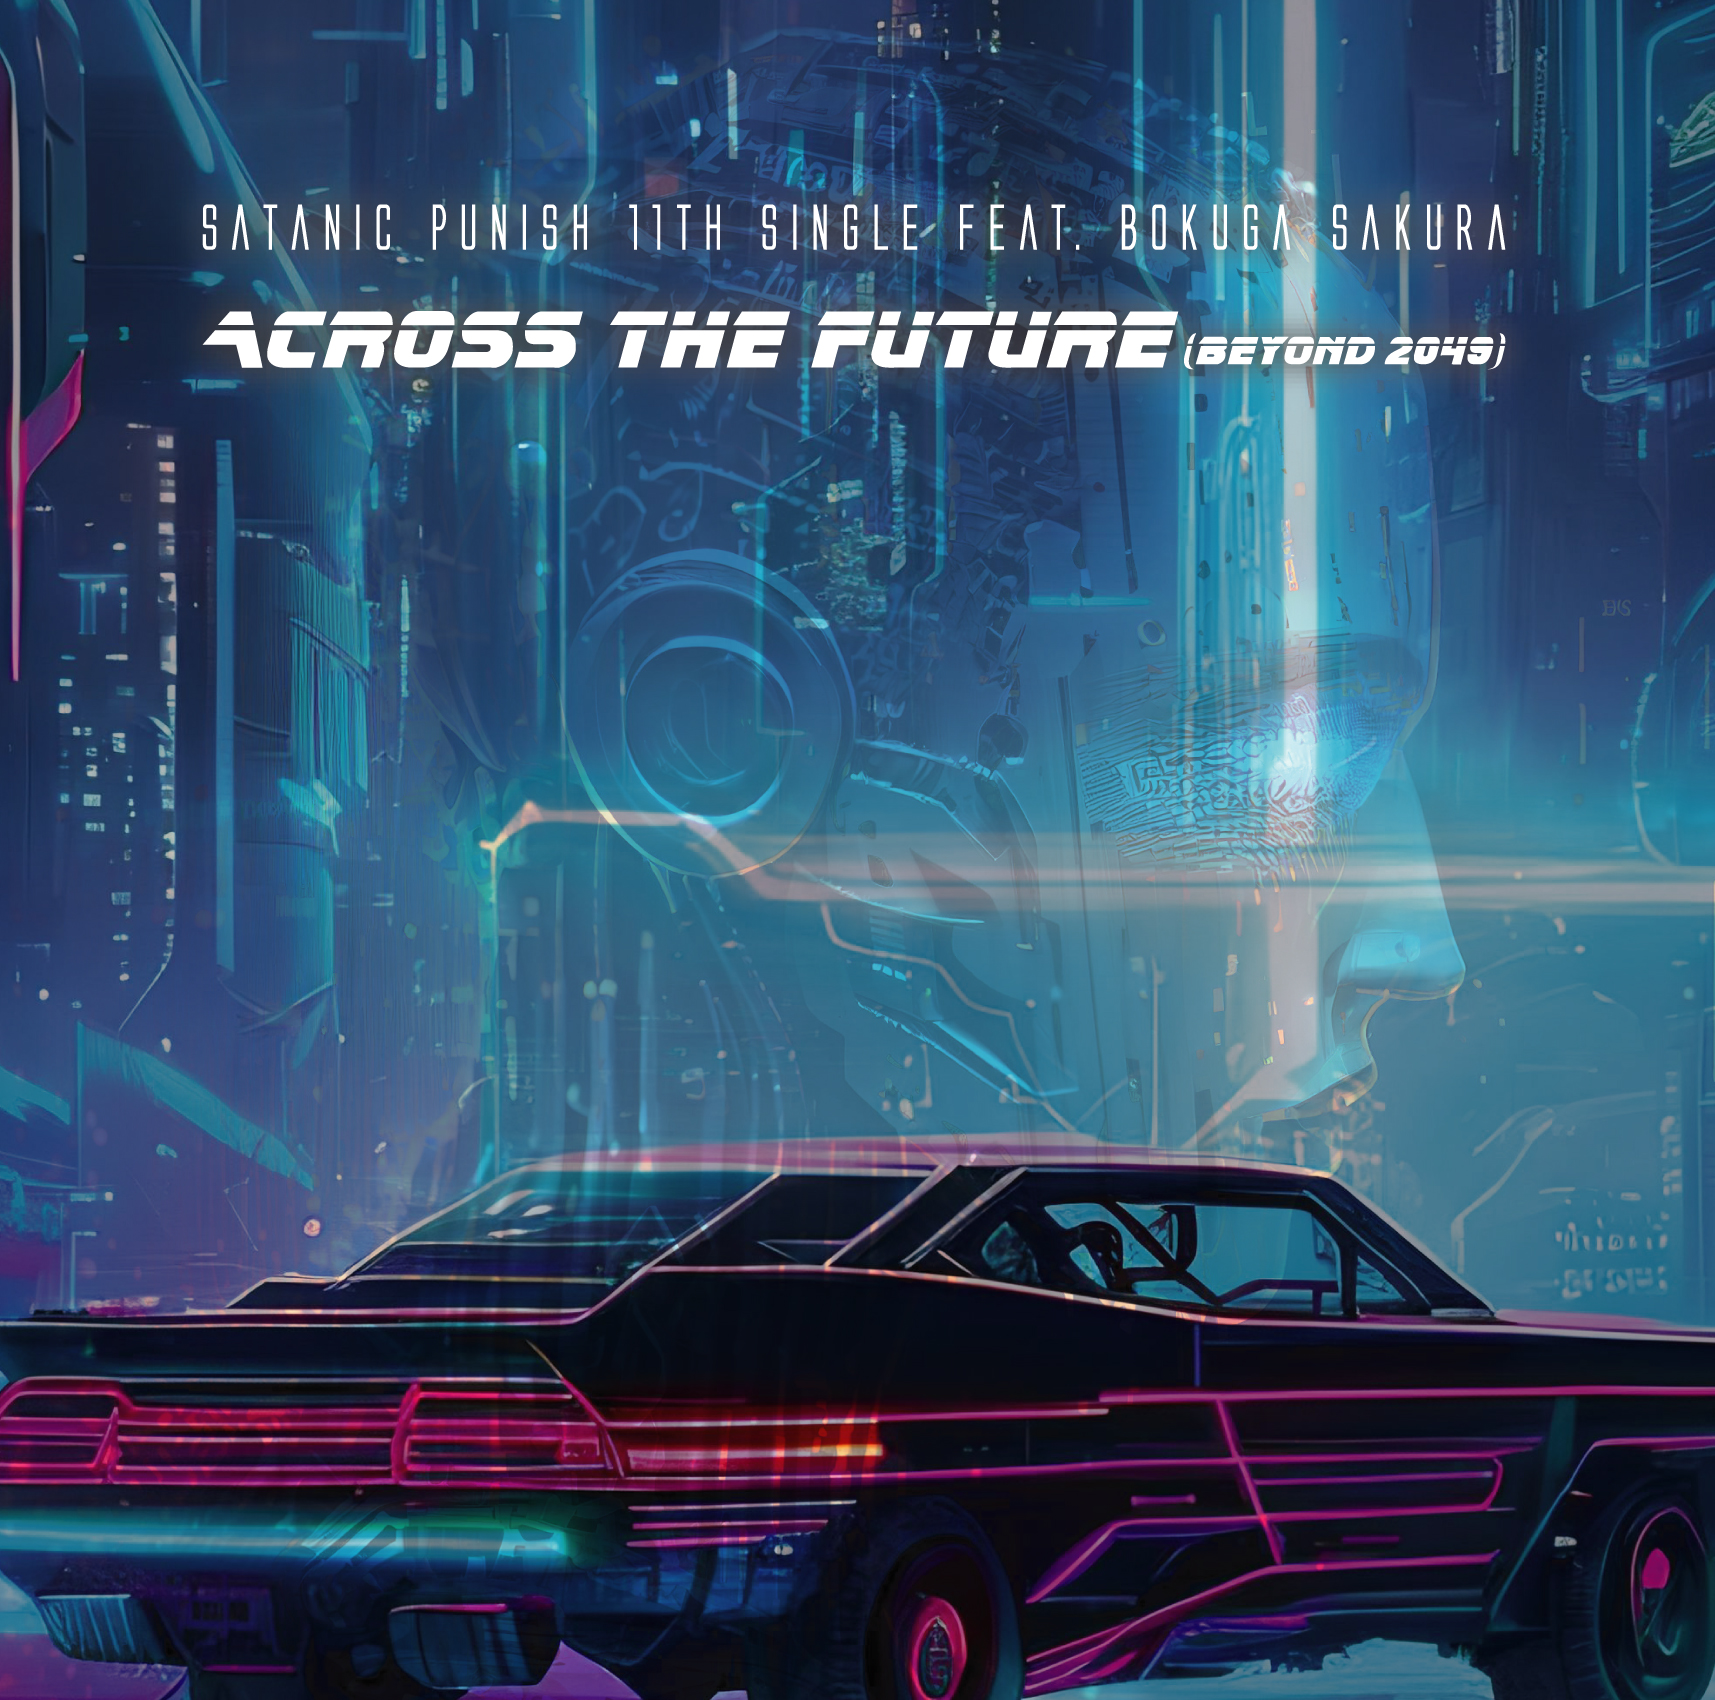 Across the Future (Beyond 2049) feat. 撲我さくら